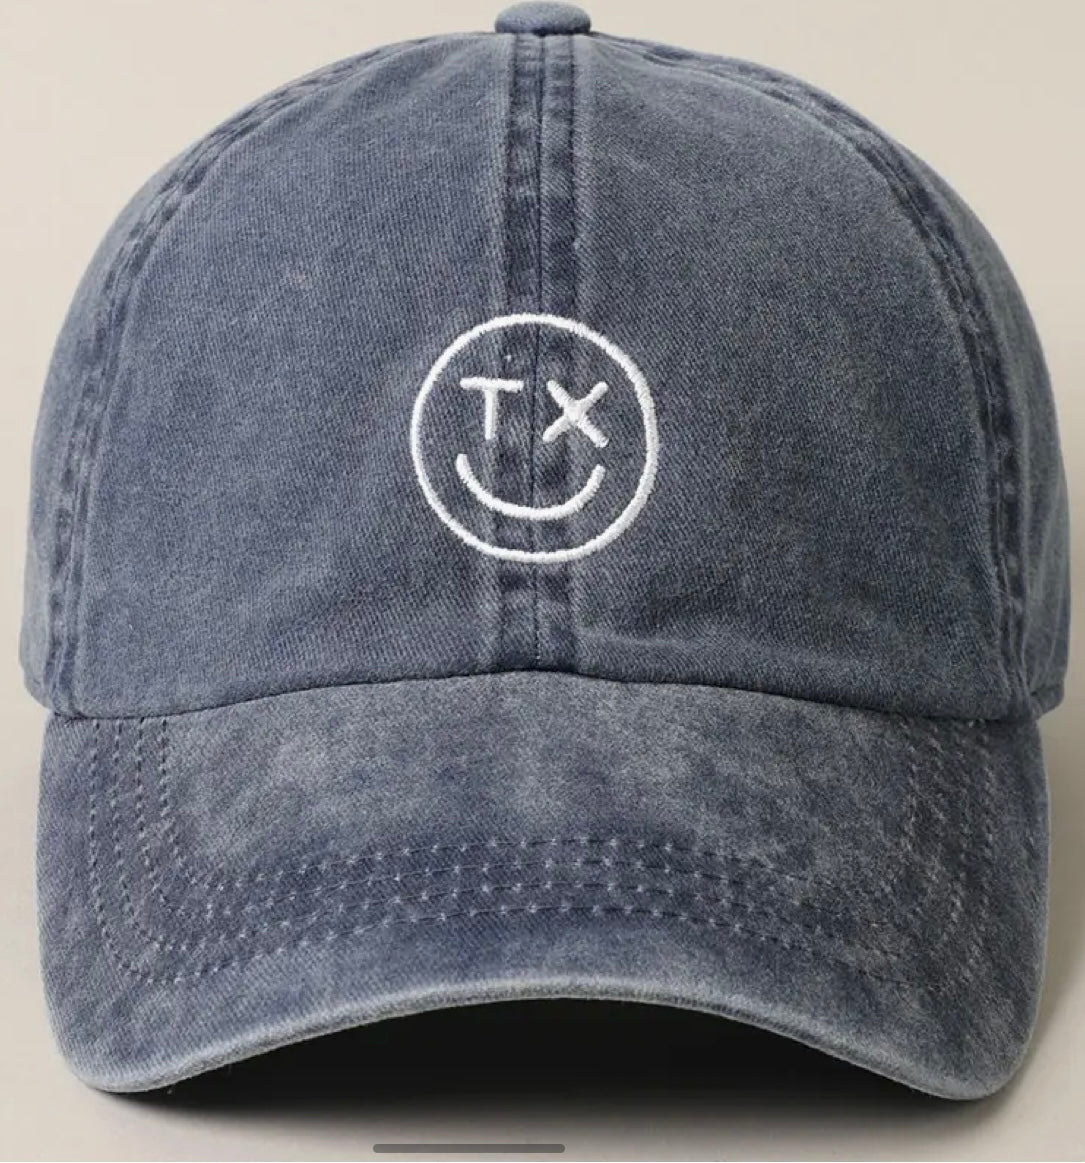 “TX Smile” baseball cap